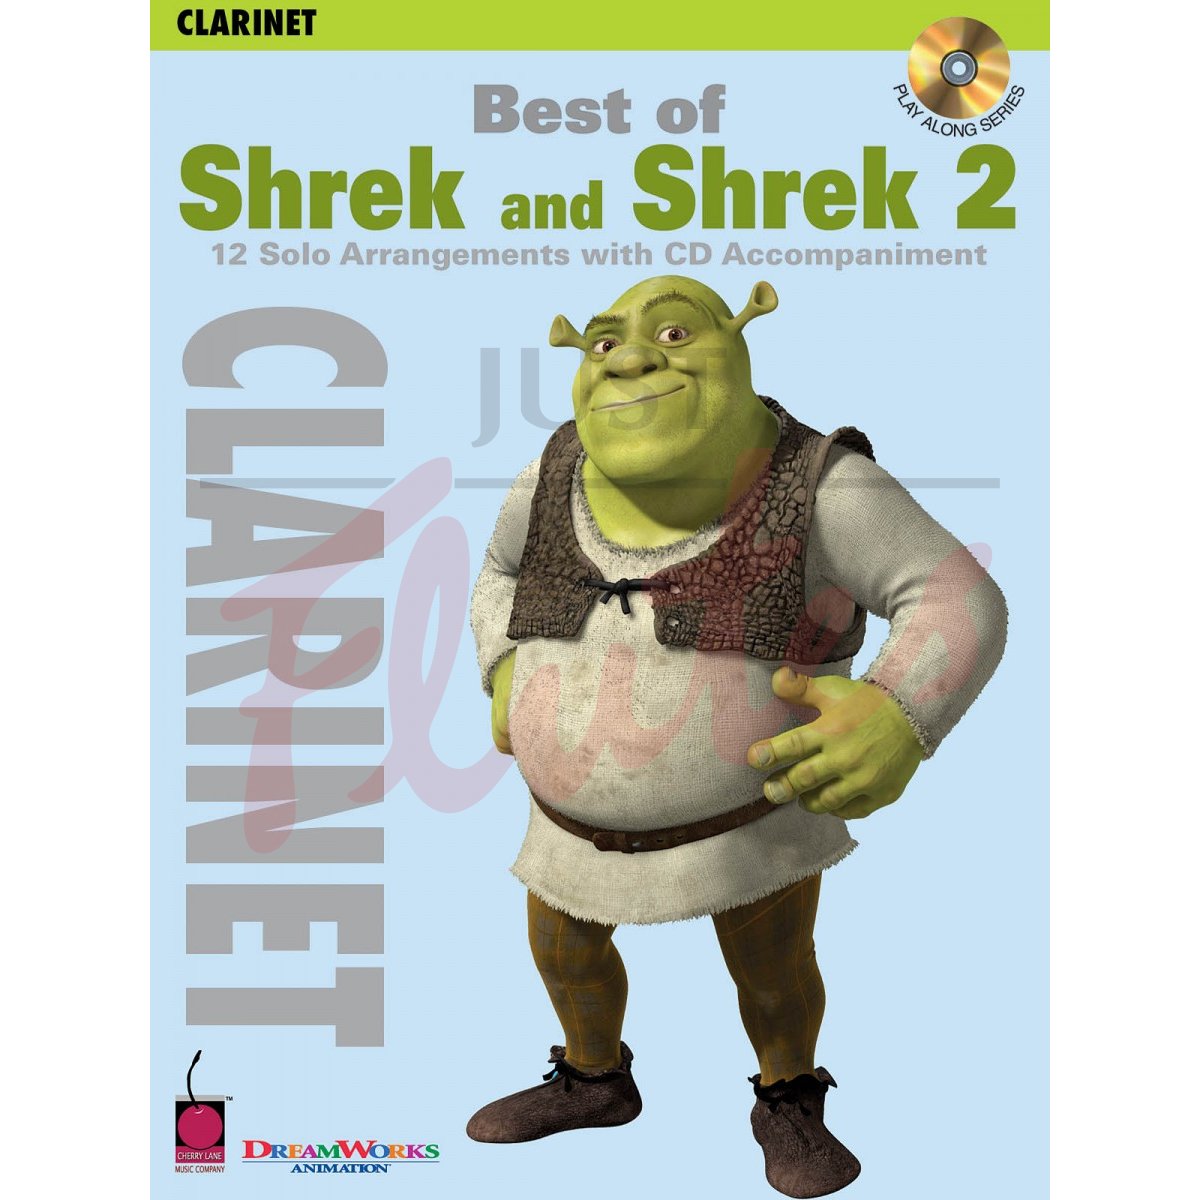 Best of Shrek and Shrek 2 [Clarinet]